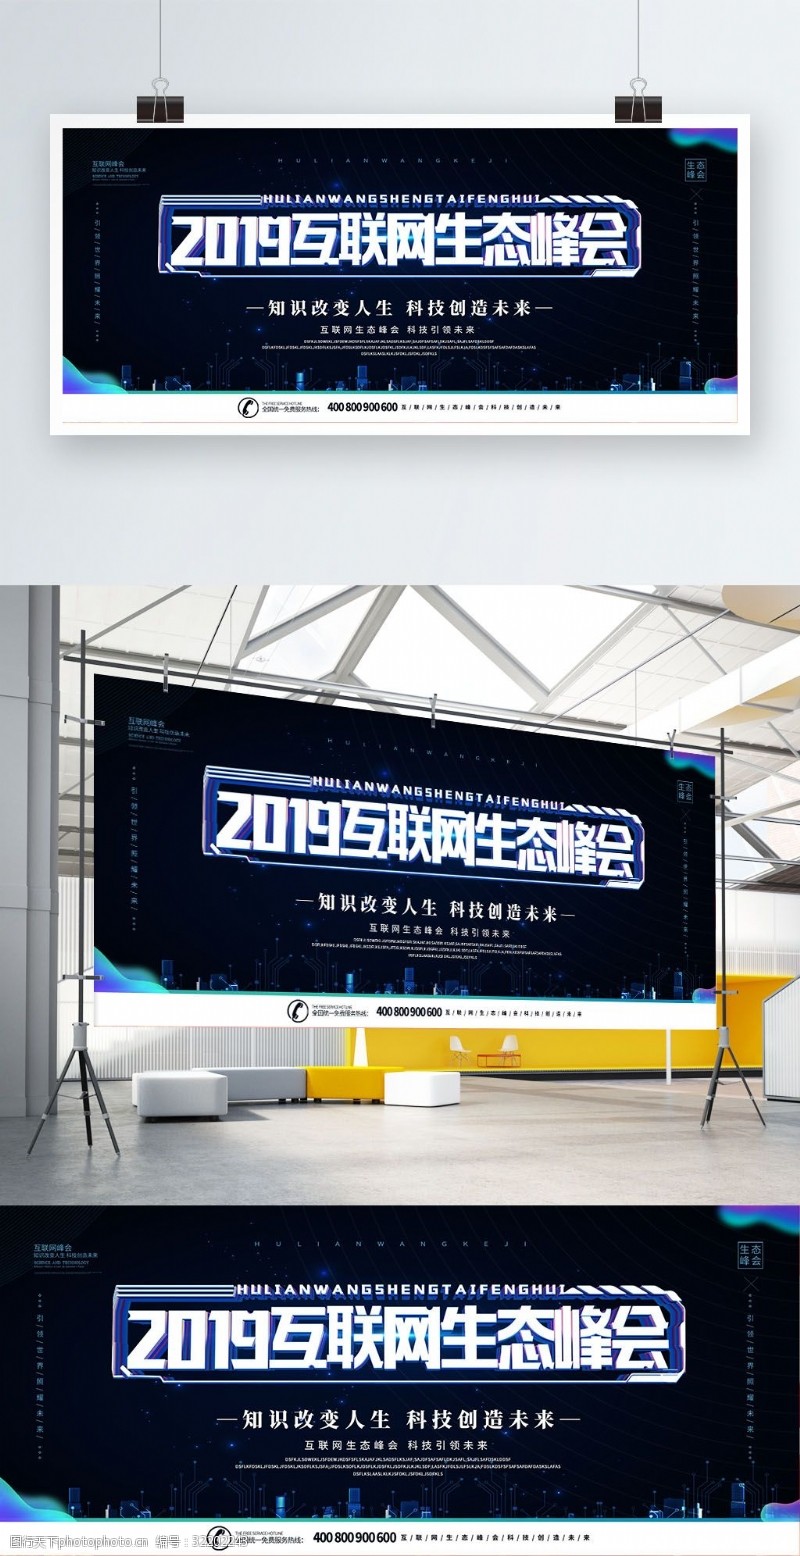 g20峰会蓝色科技风2019互联网生态峰会宣传展板